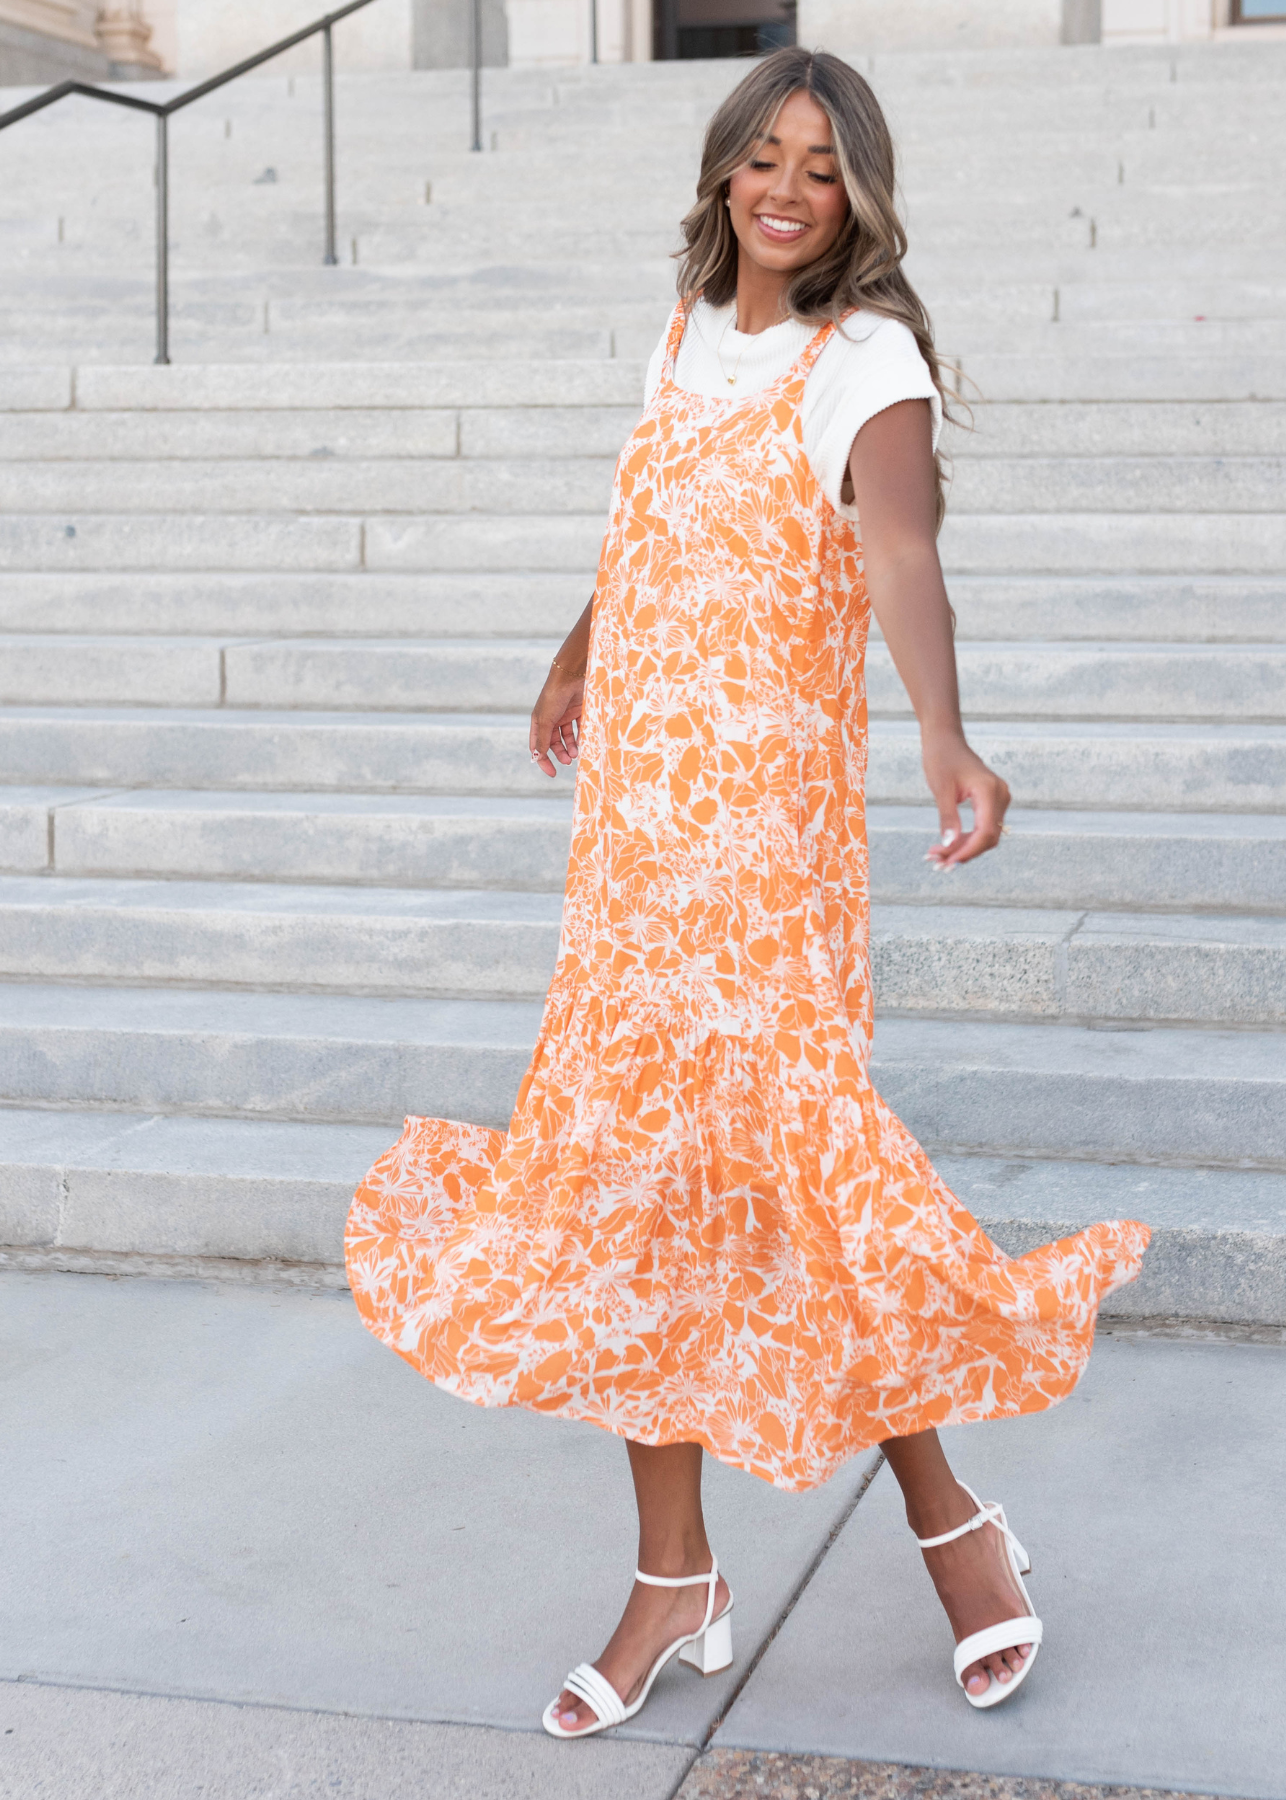 Sleeveless orange floral strap dress